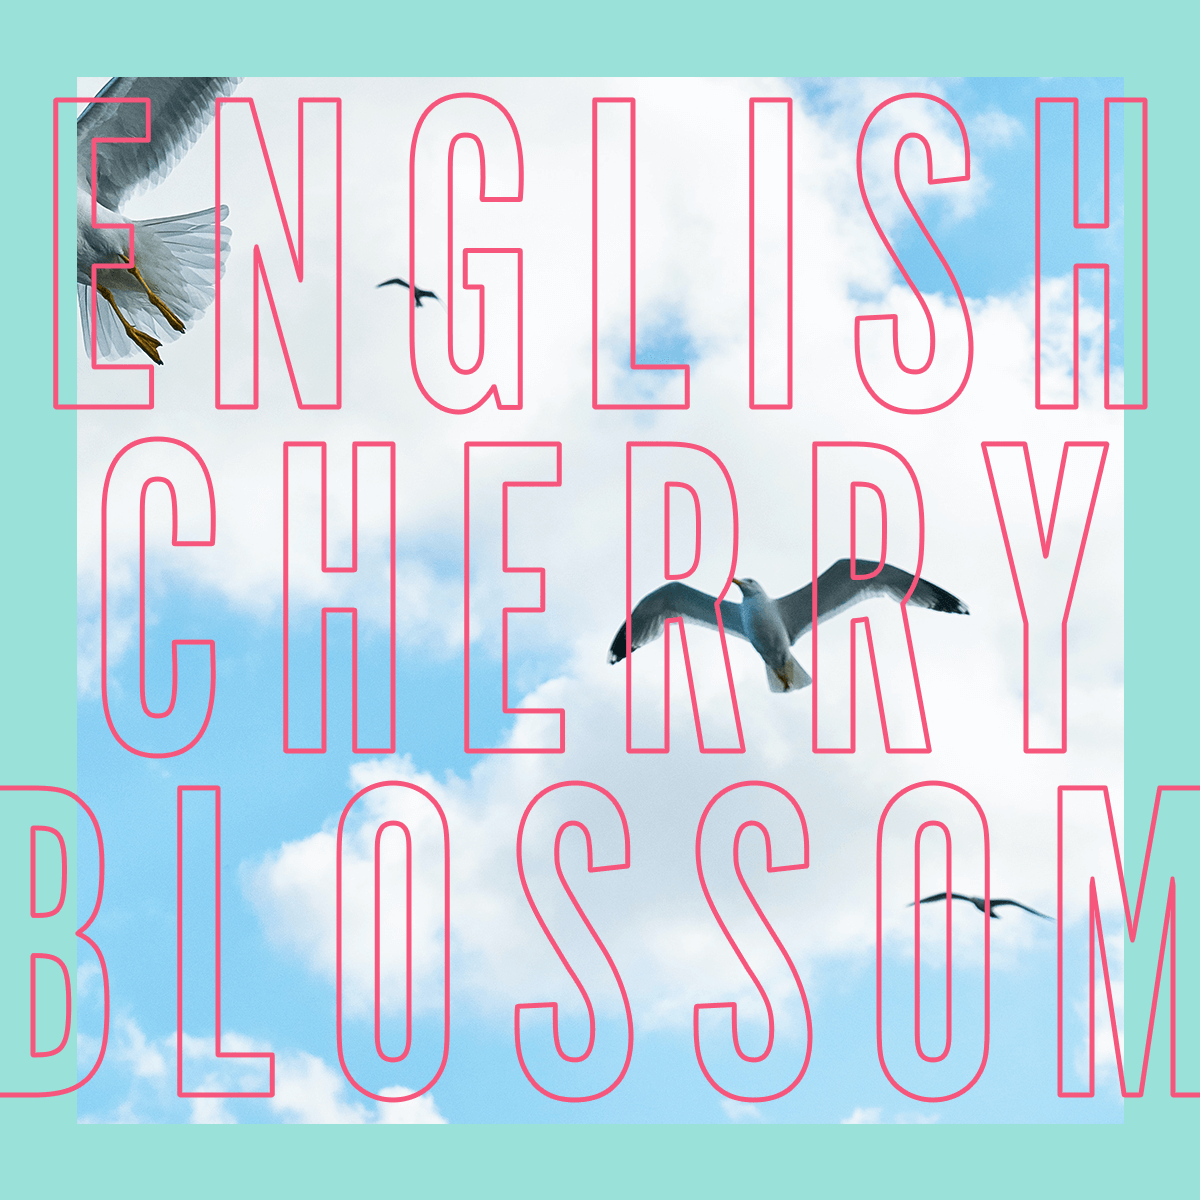 English Cherry Blossom Fragrance 10ml